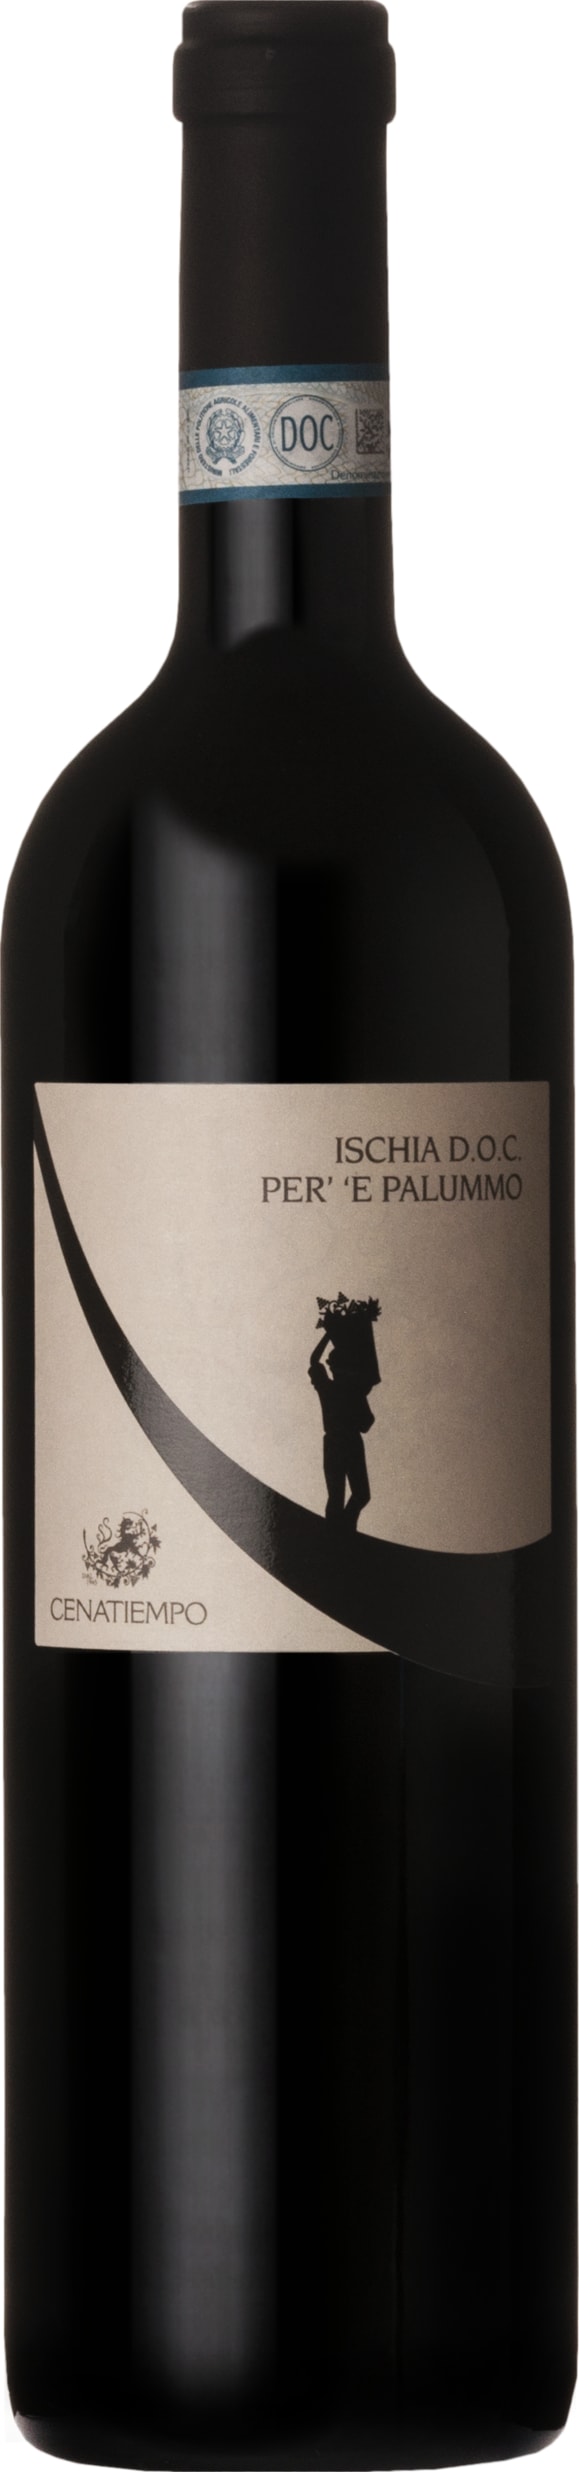 Cenatiempo Per' e Palummo (Piedirosso) Ischia DOC 2019 75cl - Buy Cenatiempo Wines from GREAT WINES DIRECT wine shop